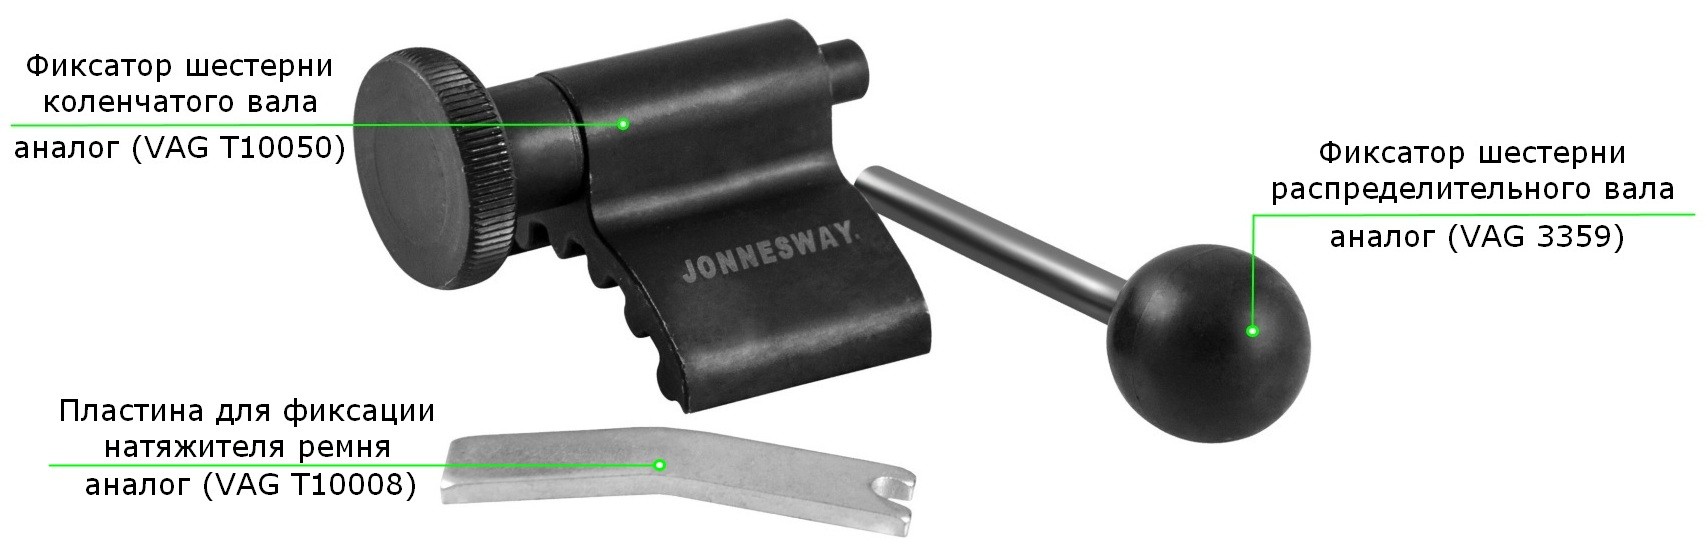 Набор приспособлений для фиксации шестерни привода валов ГРМ двигателей Jonnesway AI010069 - фото